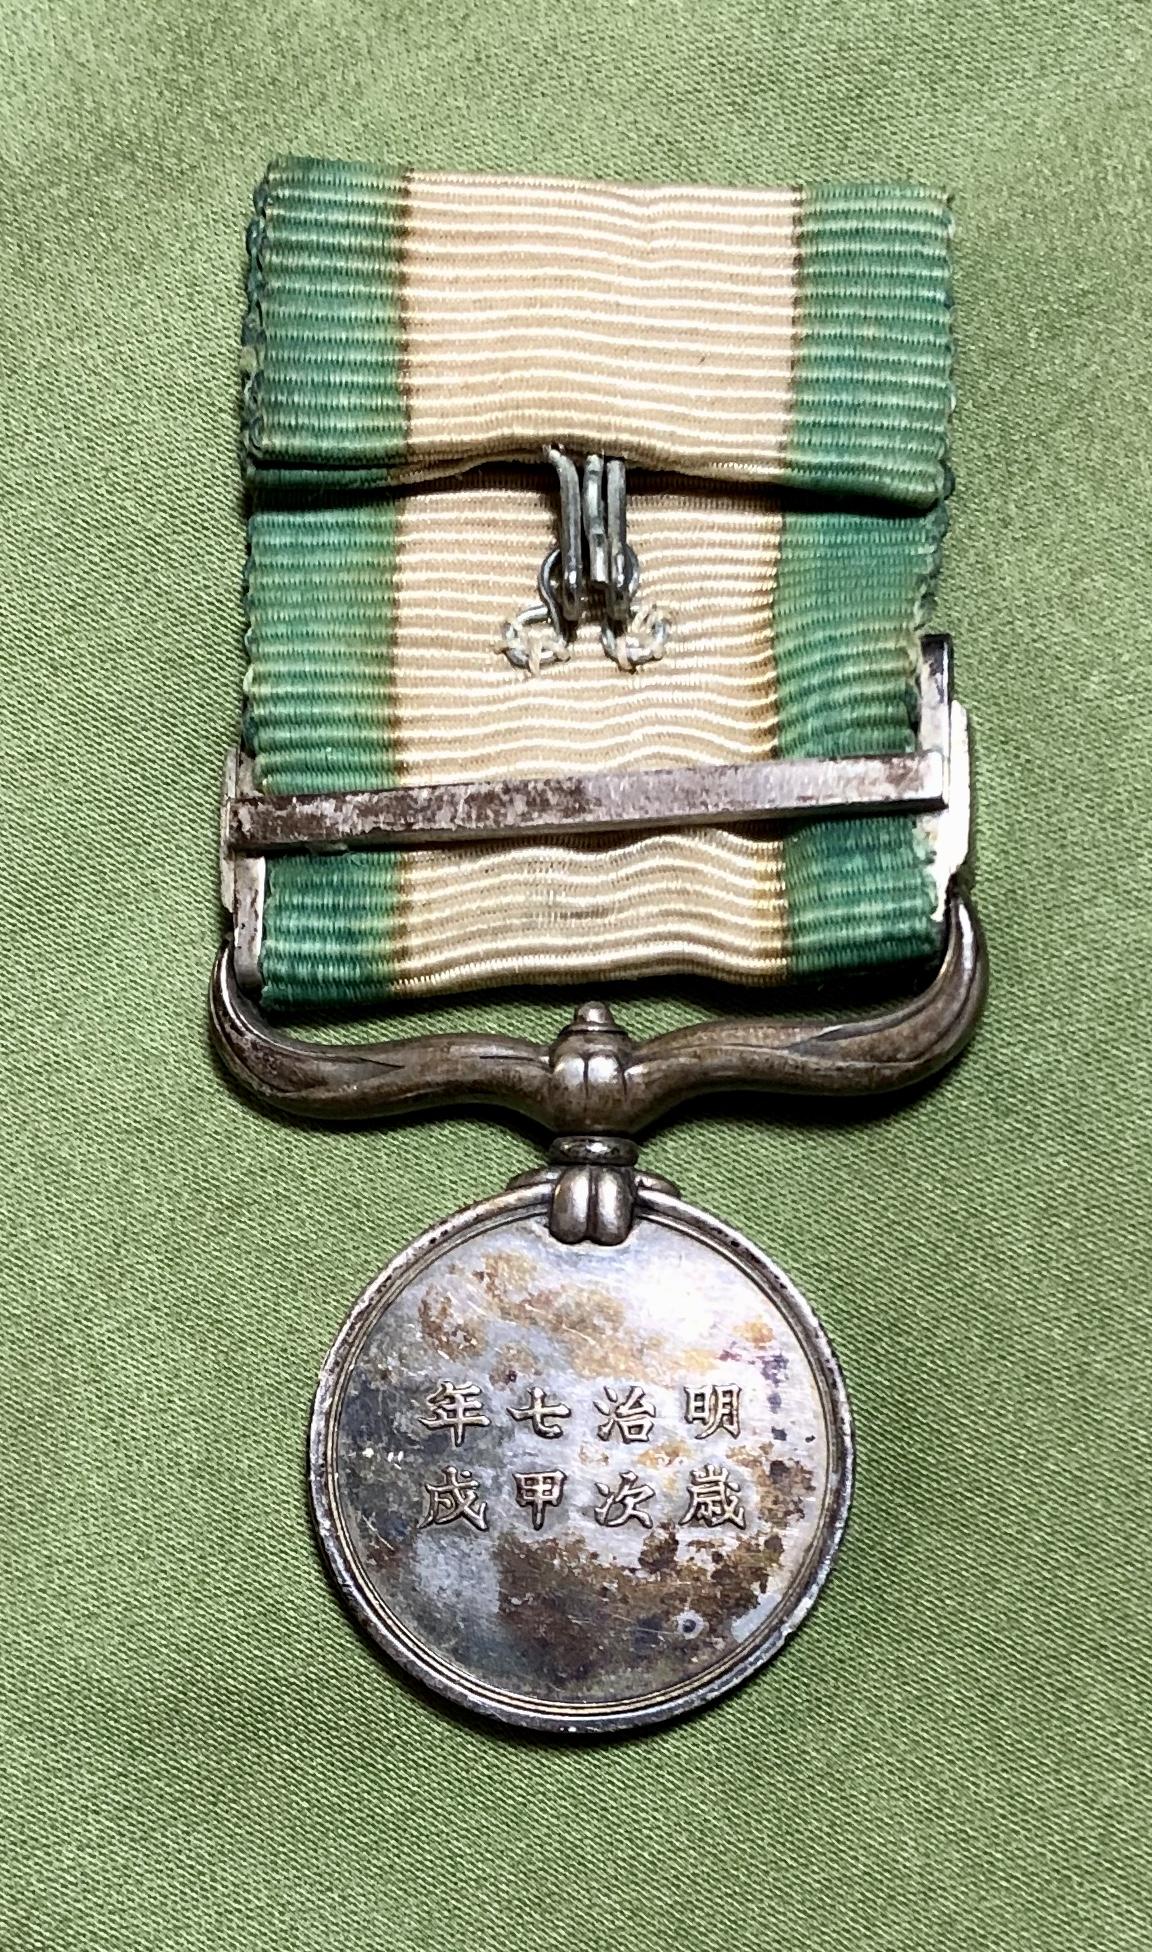 Help please with 1874 war medal - Japan - Gentleman's Military Interest ...